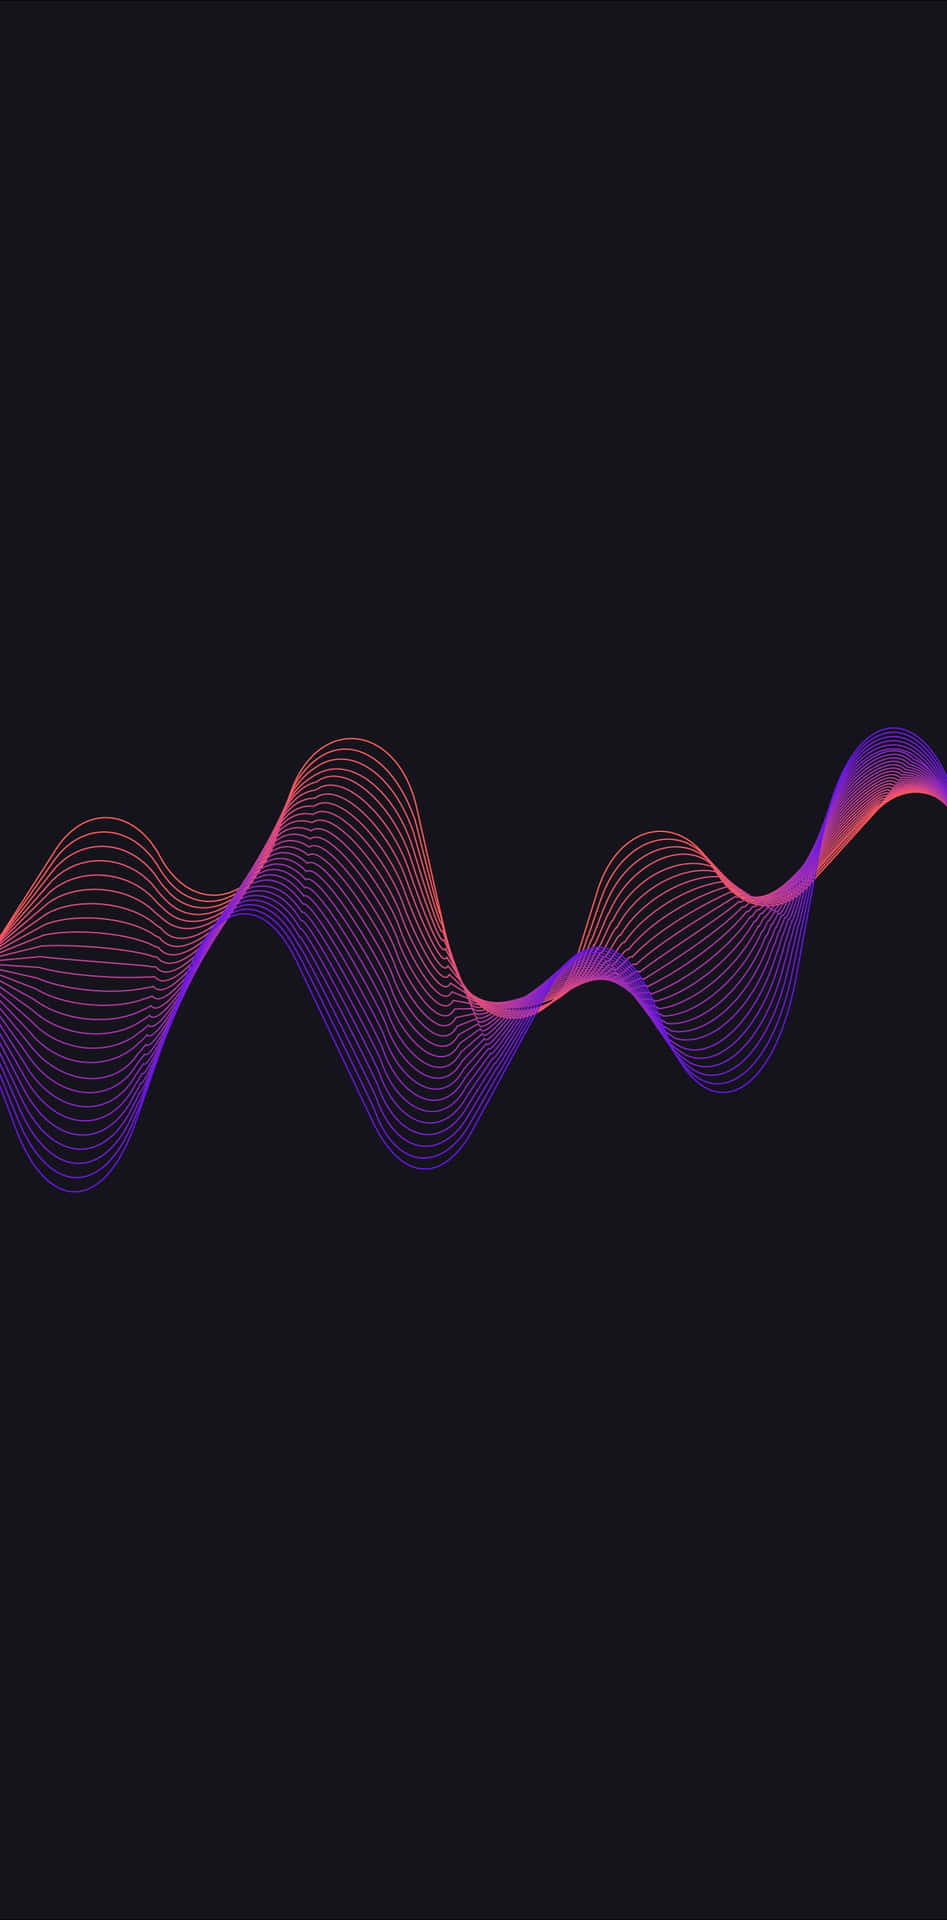 Abstract Soundwave Design Background